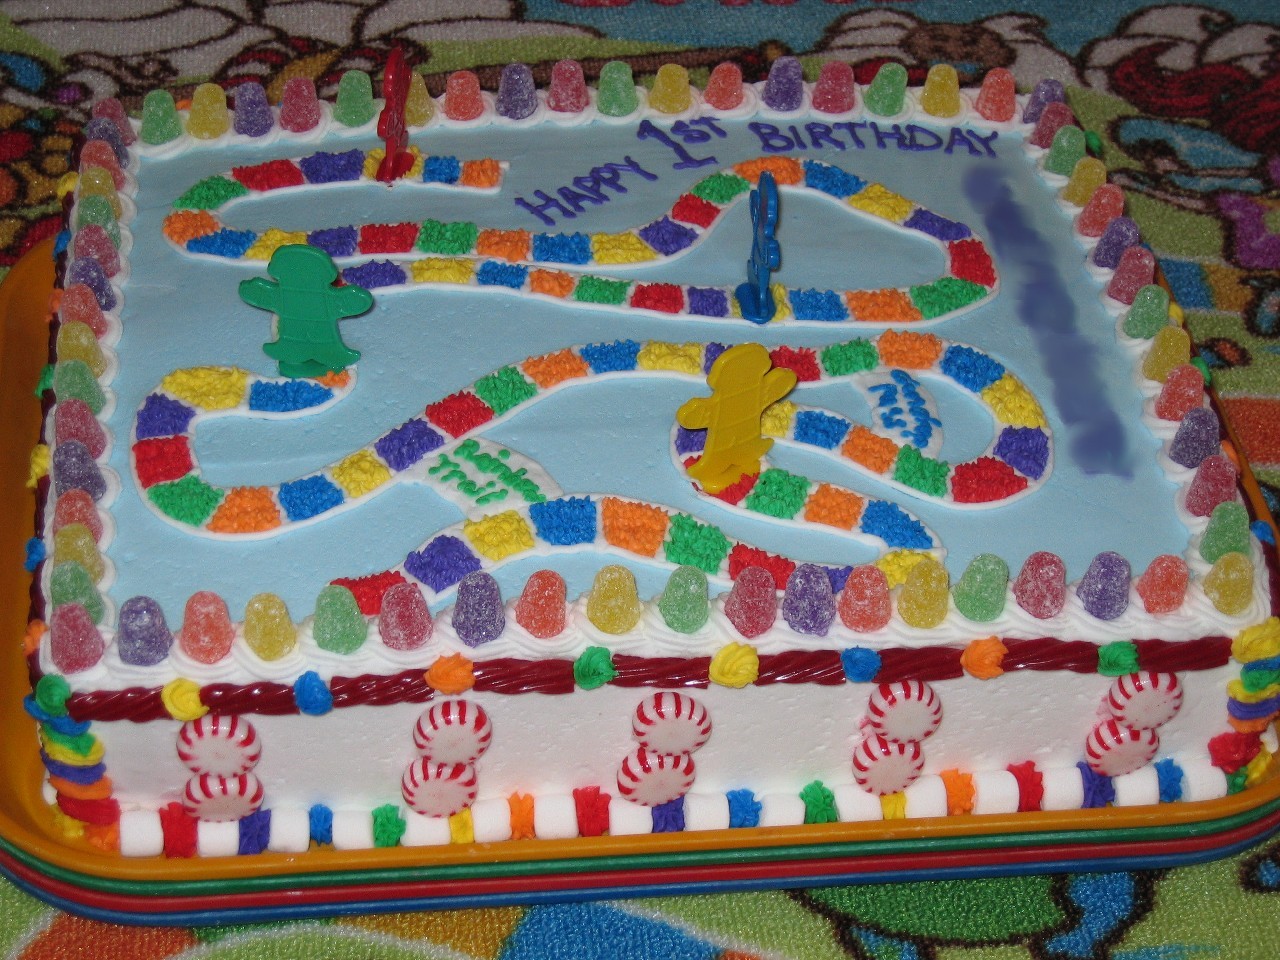 Candyland Themed Cake